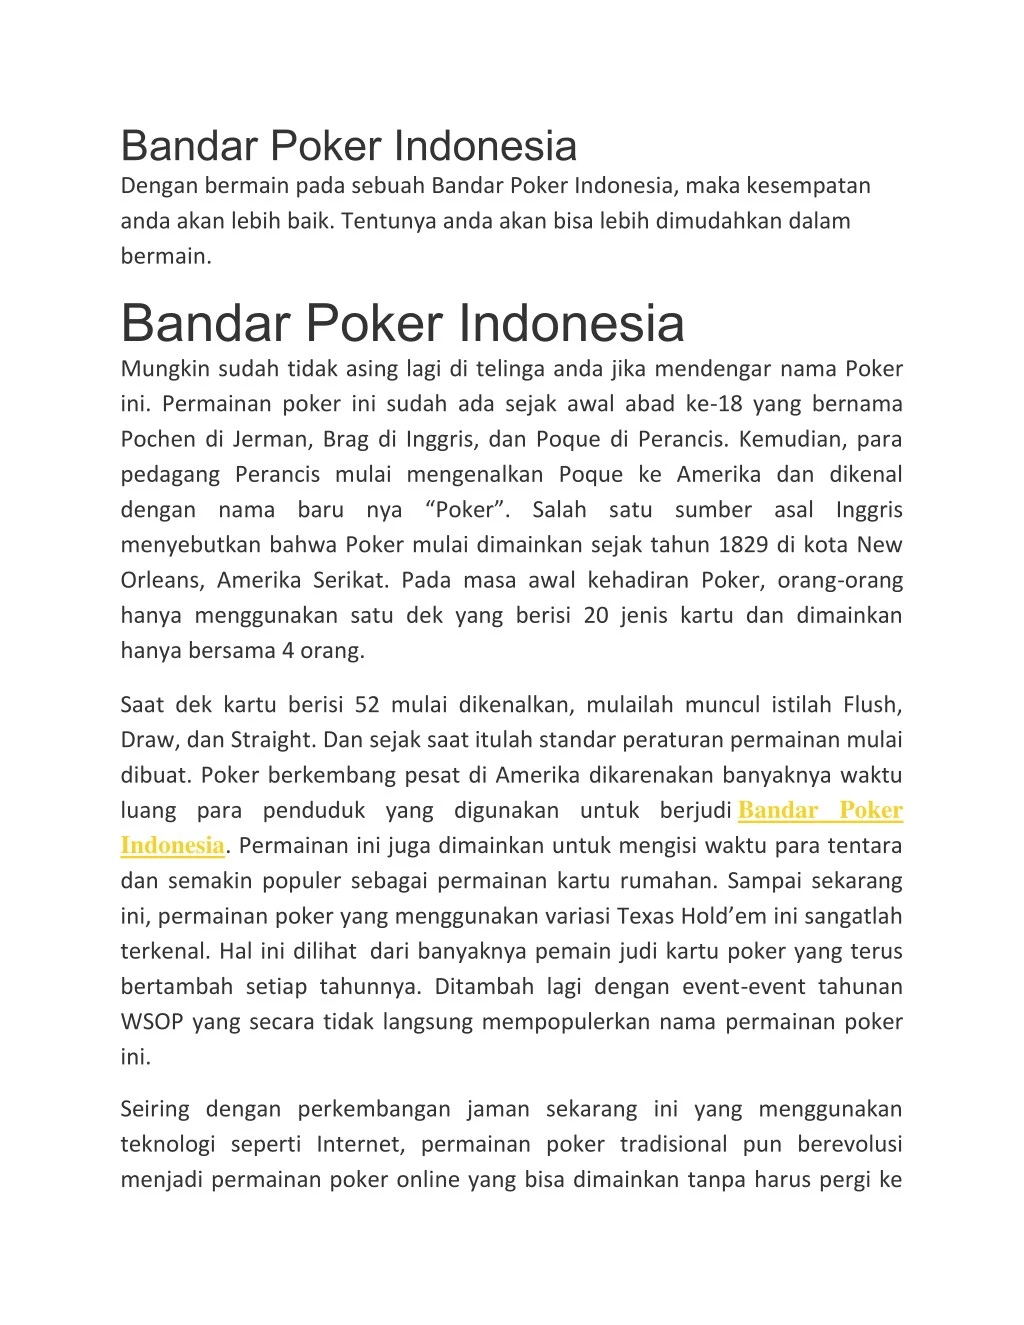 bandar poker indonesia dengan bermain pada sebuah